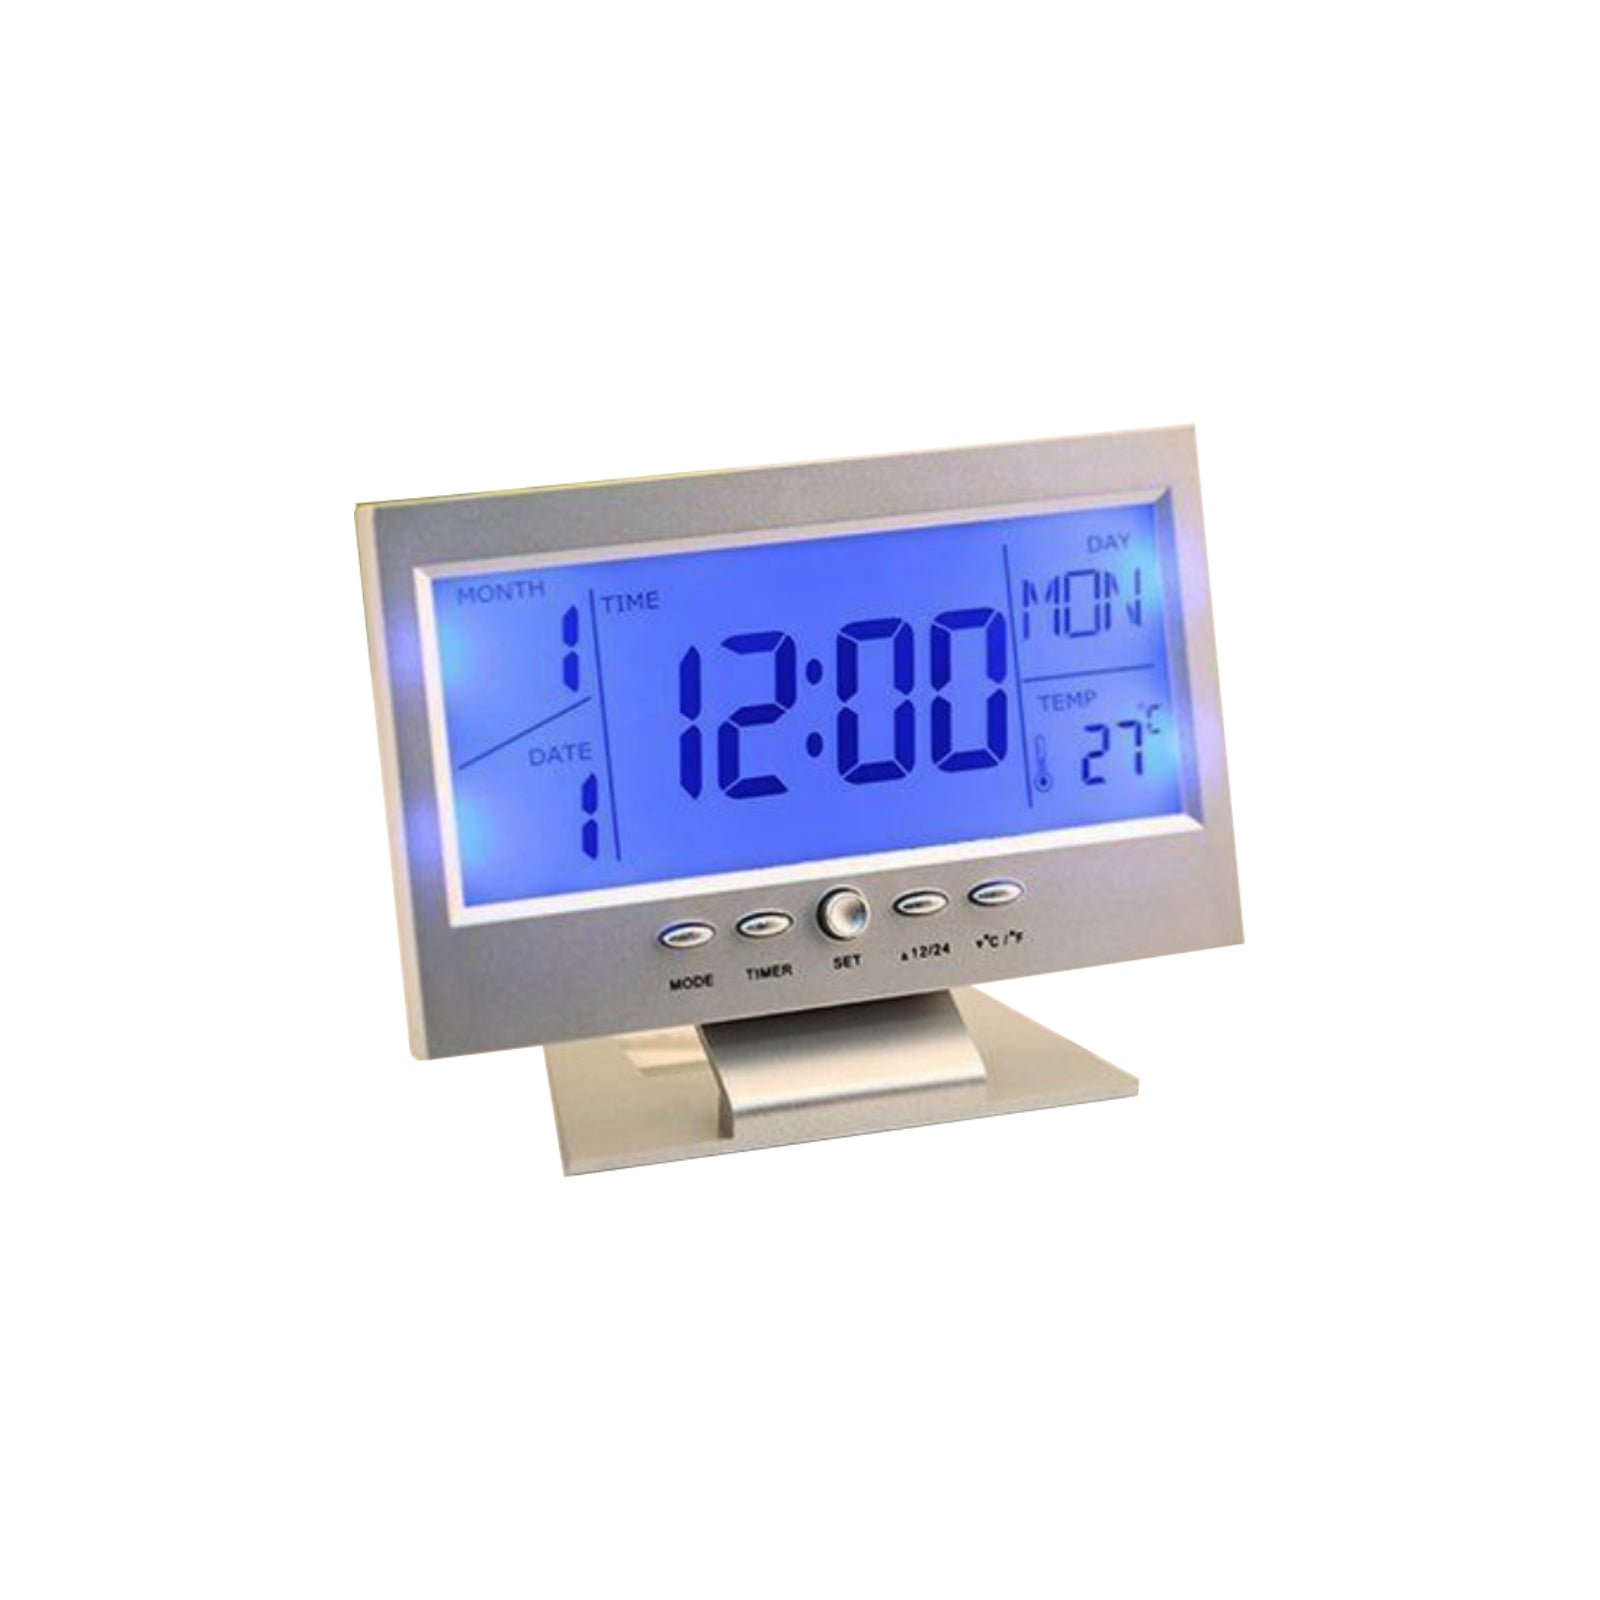 Digital LCD Desk Clock Alarm Temperature - Black And Silver - Homeware Discounts